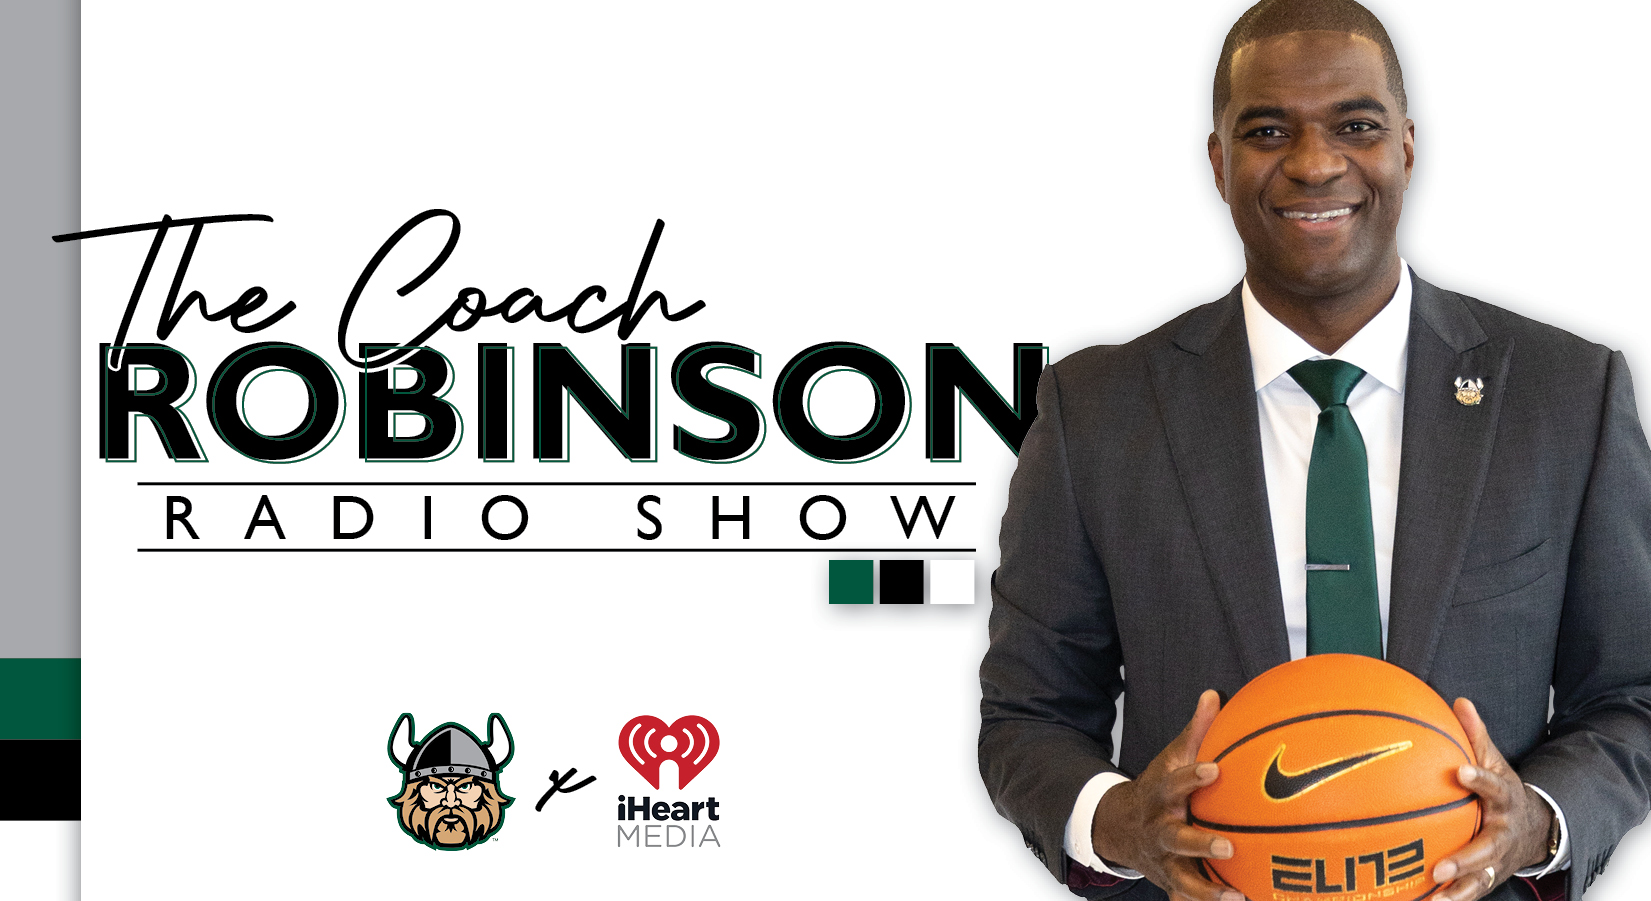 Coach Robinson Show Set To Air Live Tonight on Fox Sports 1350 AM